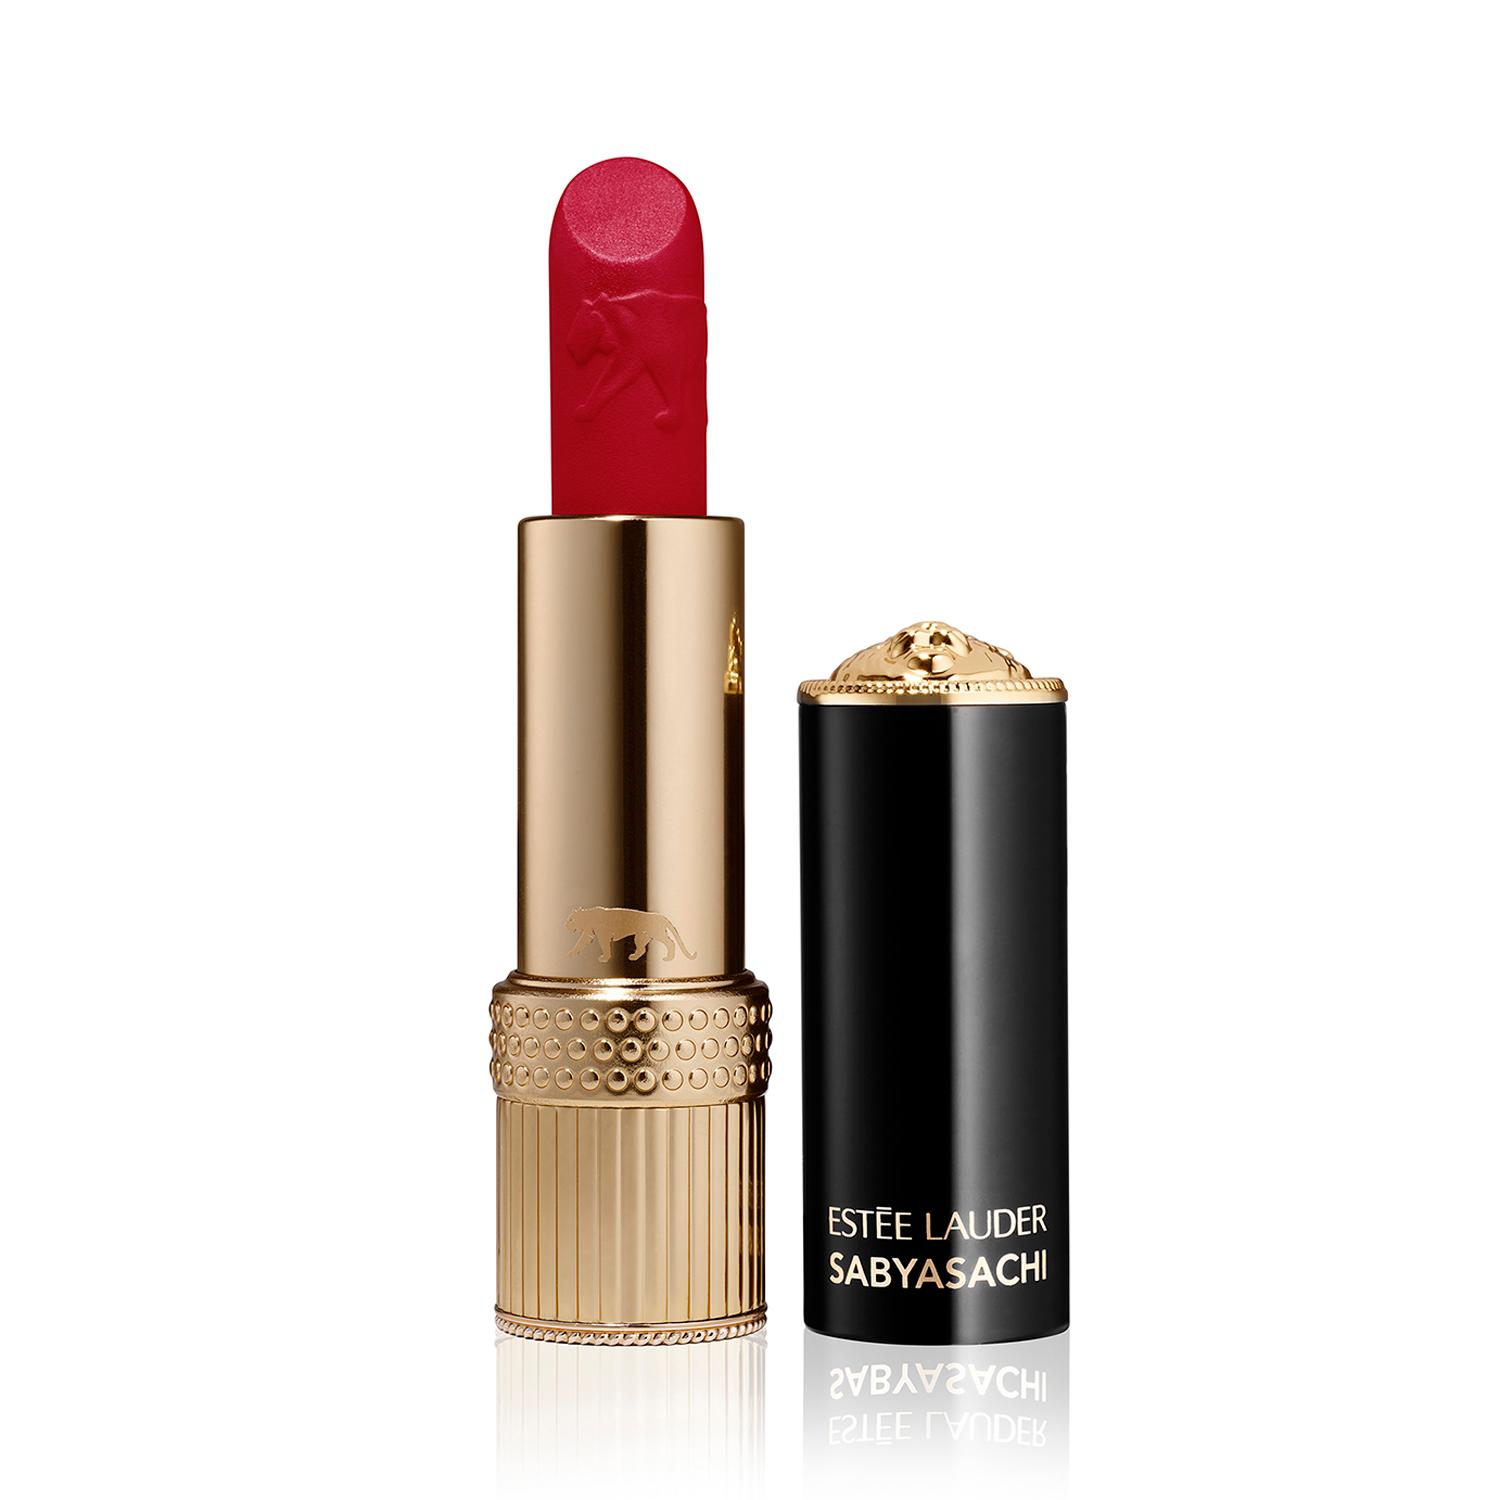 Estee Lauder | Estee Lauder Sabyasachi Limited Edition Lipstick Collection - Calcutta Red (3.8 g)